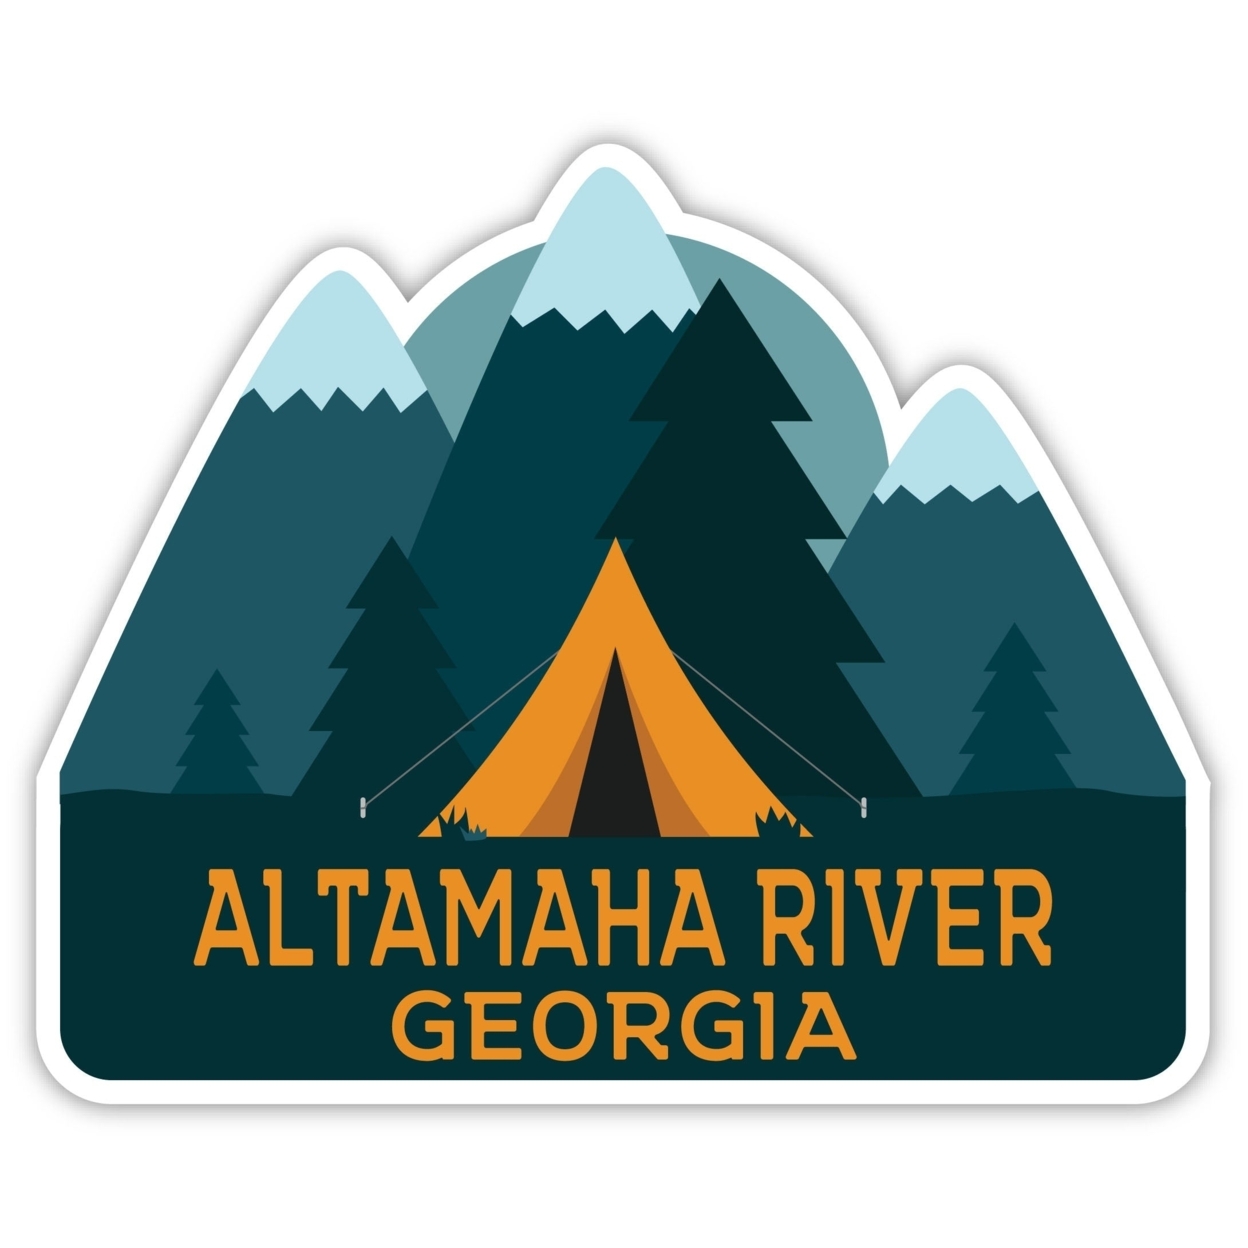 Altamaha River Georgia Souvenir Decorative Stickers (Choose Theme And Size) - 4-Pack, 6-Inch, Tent